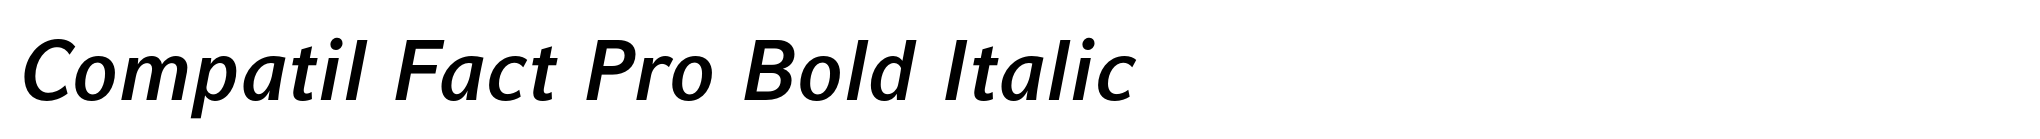 Compatil Fact Pro Bold Italic image